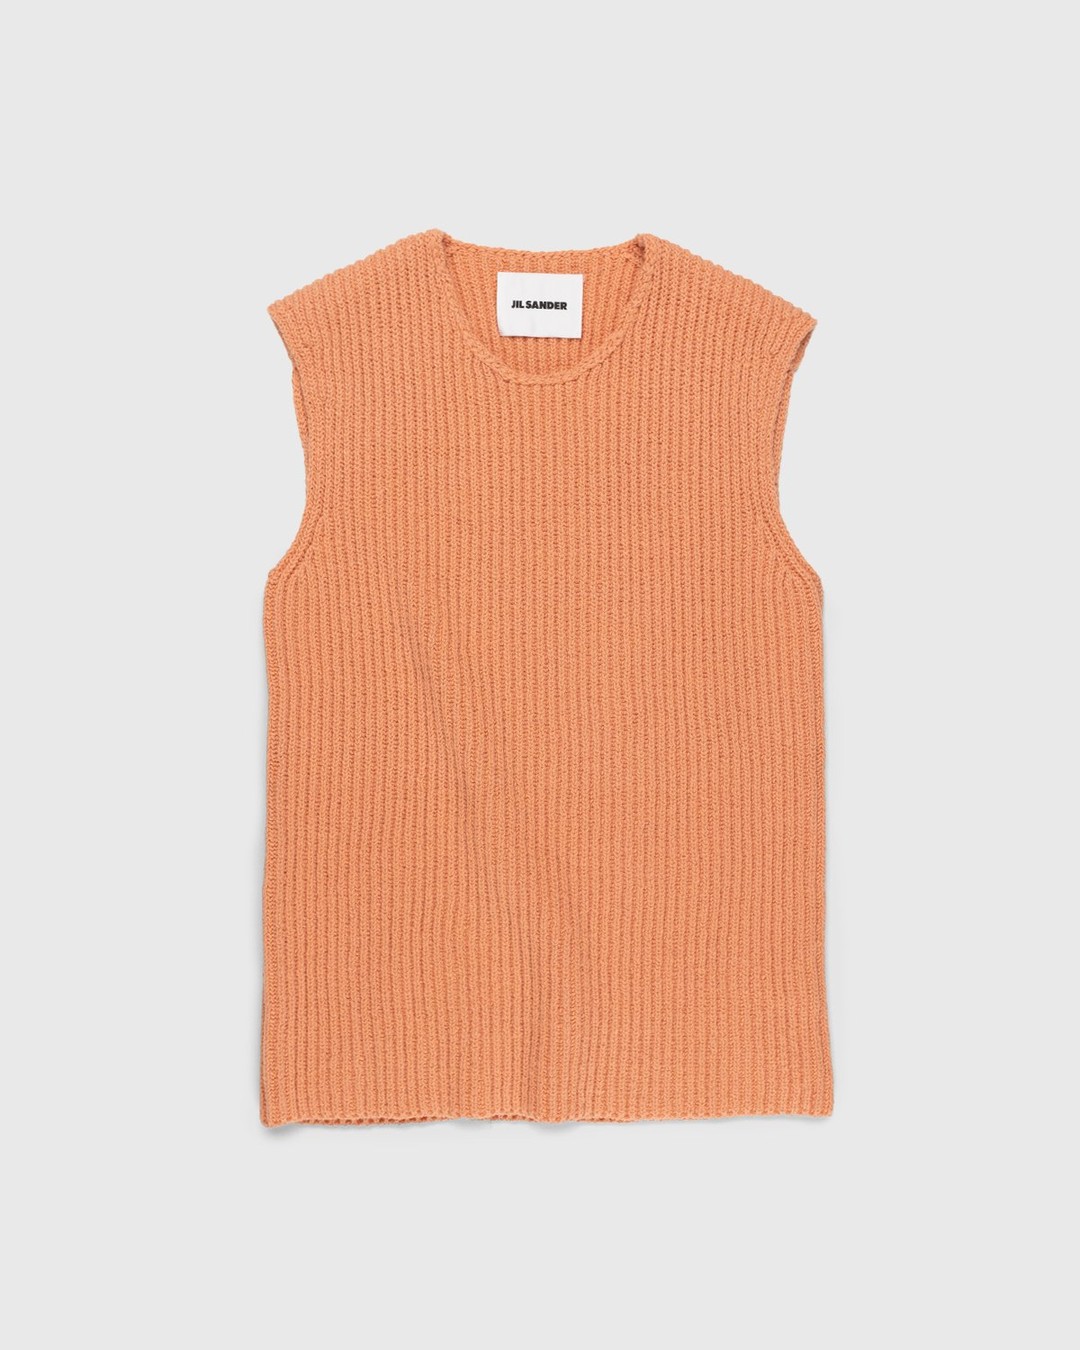 Jil Sander – Rib Knit Vest Orange - Gilets - Orange - Image 1